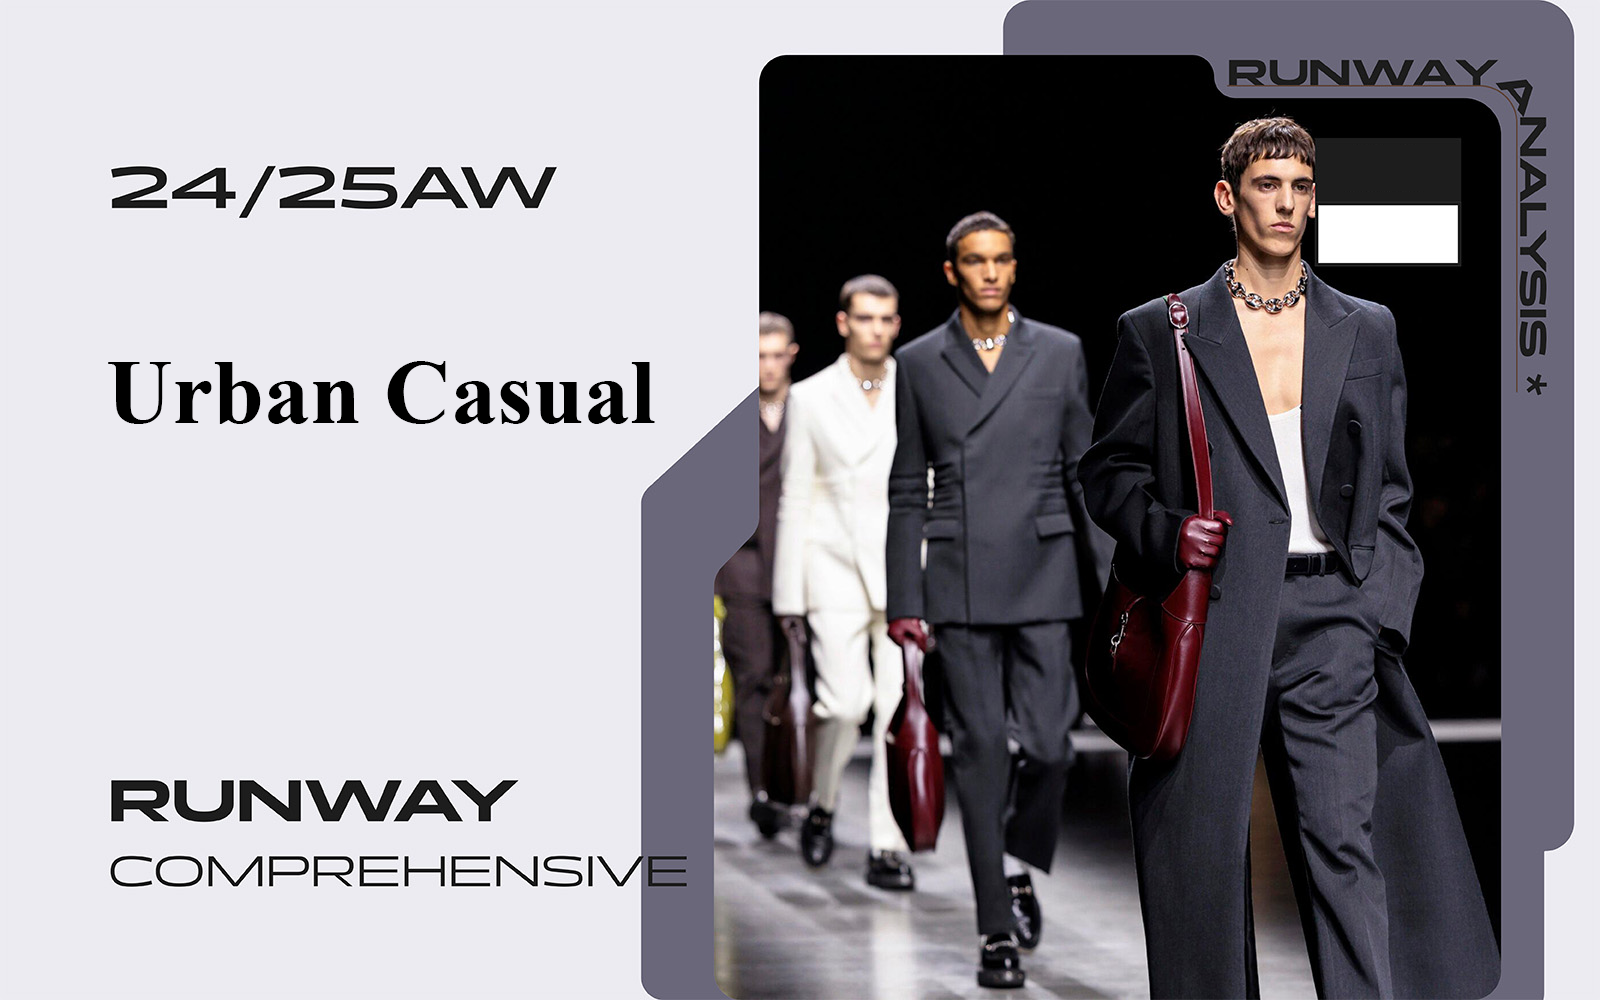 Urban Casual -- The Comprehensive Analysis of Menswear Runway